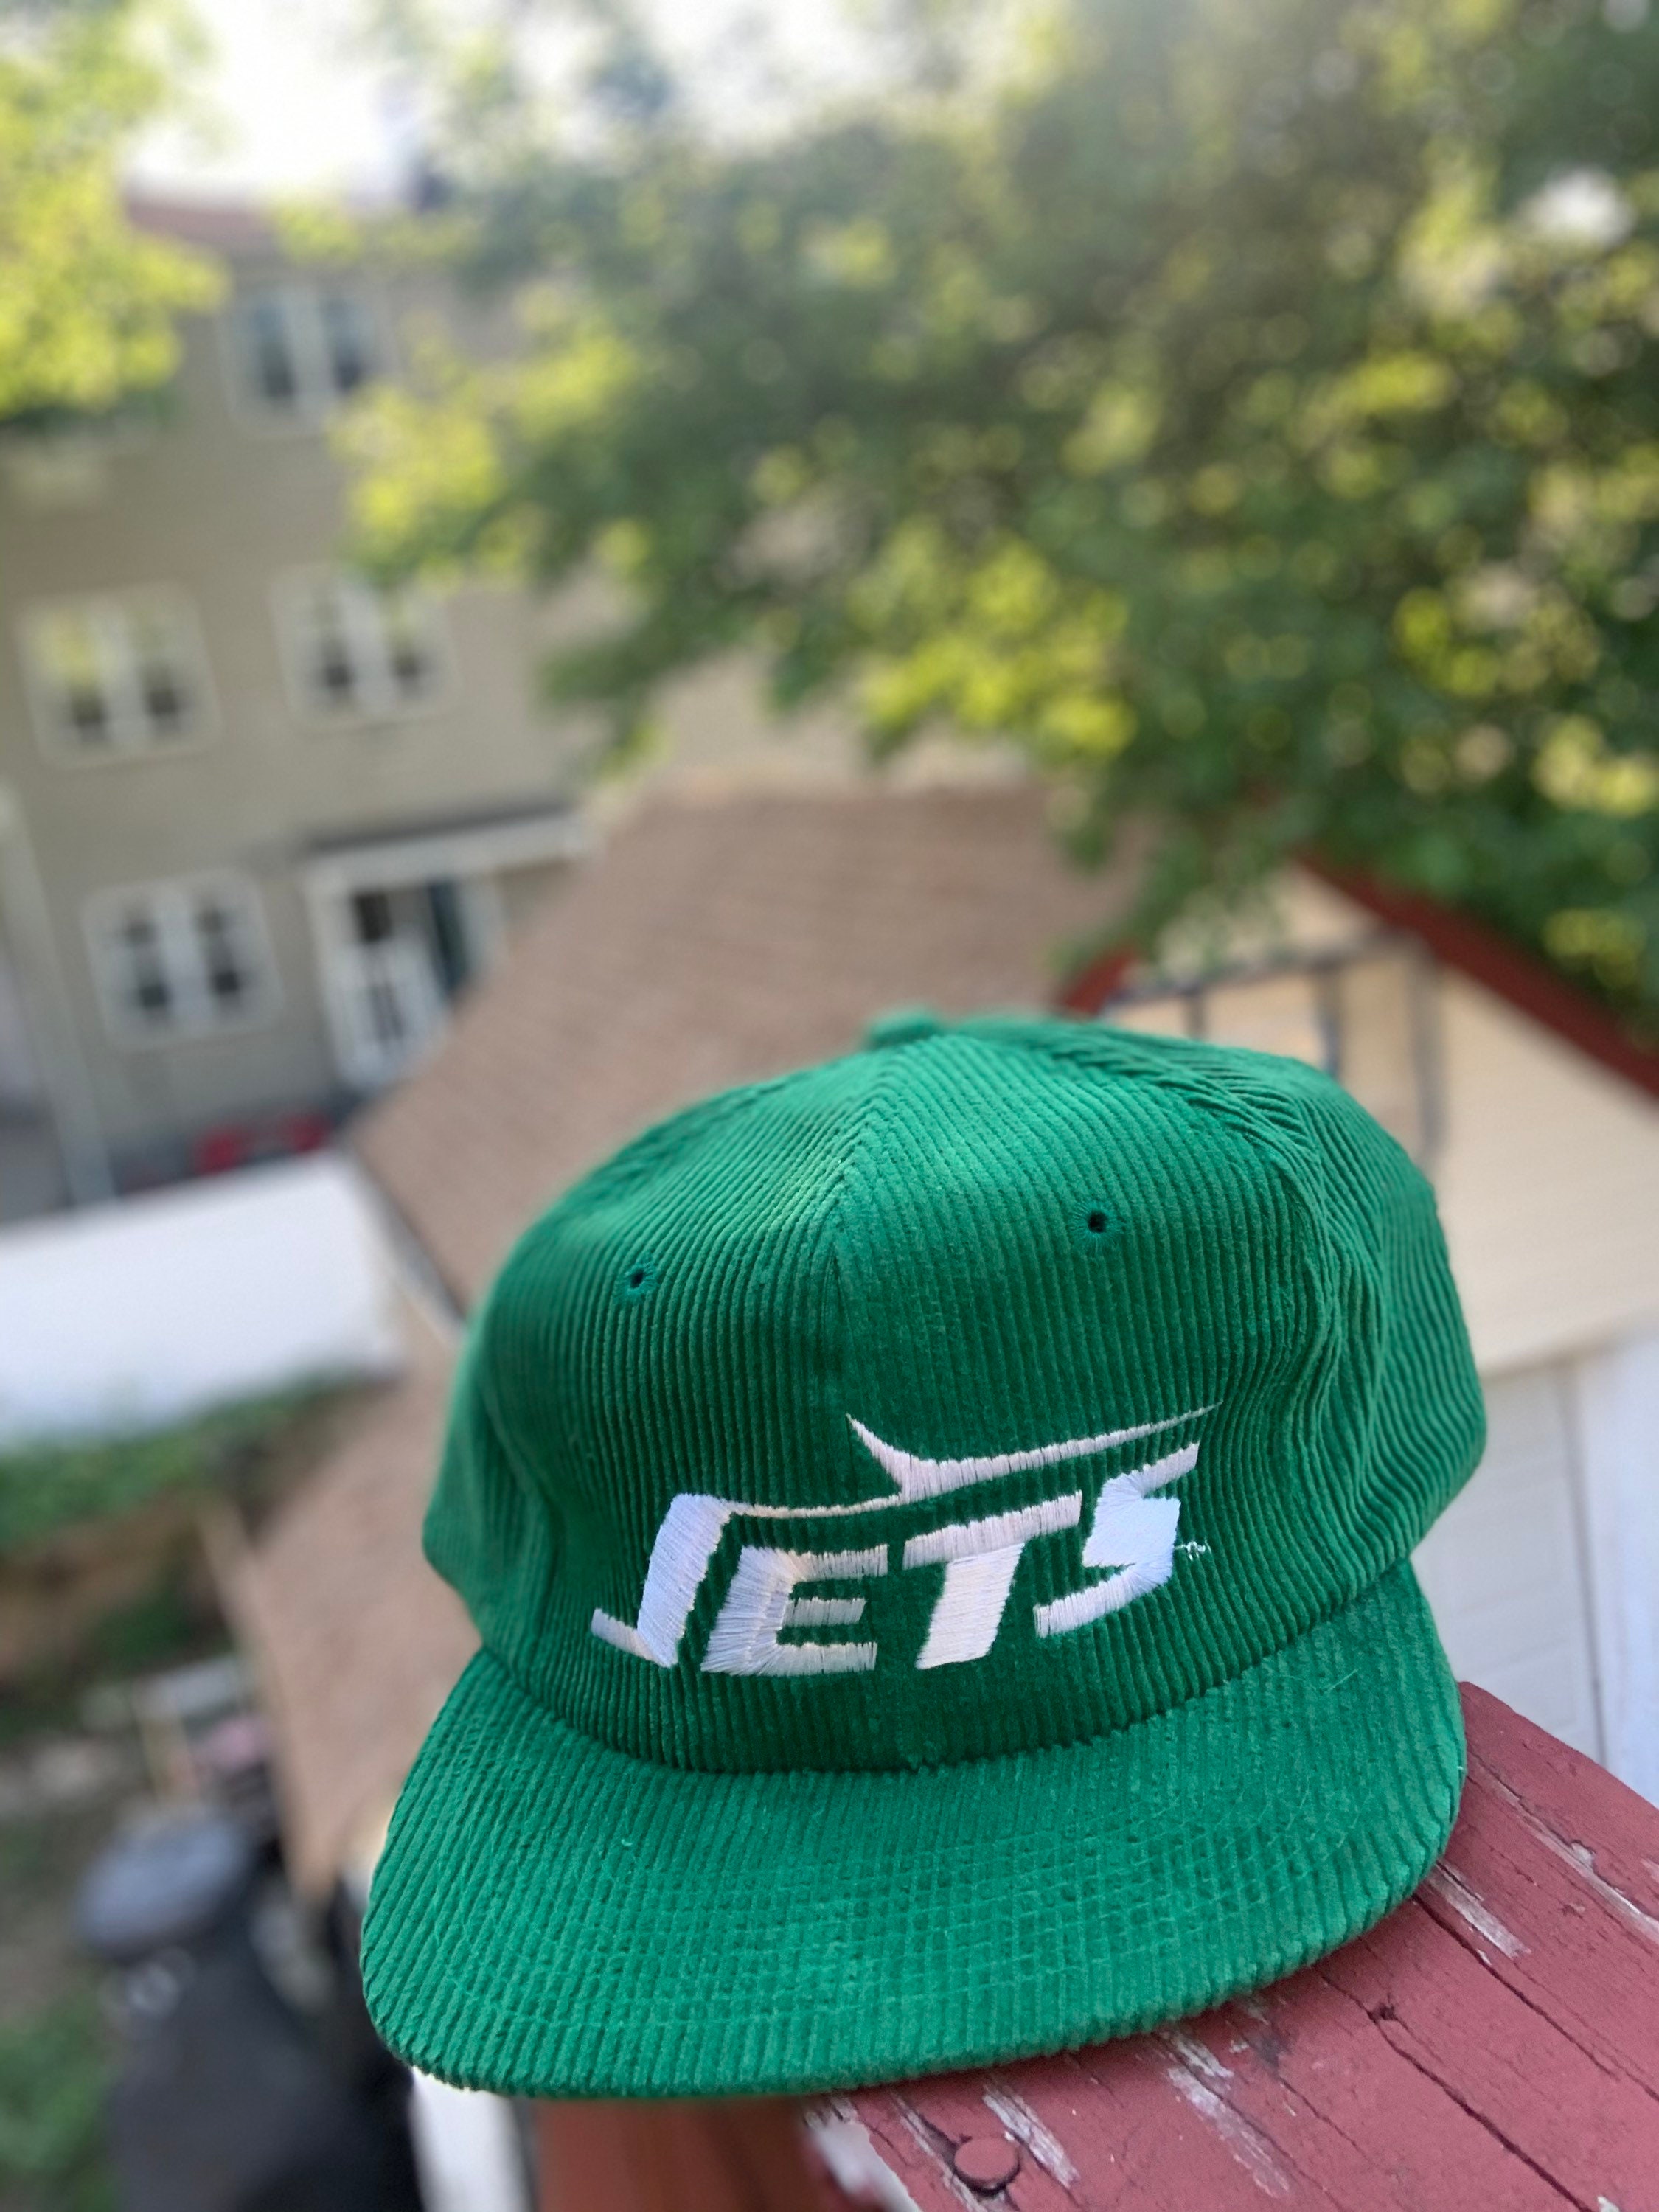 Buy EWW New York Jets Adjustable Baseball Hat Mens Sports Fit Cap